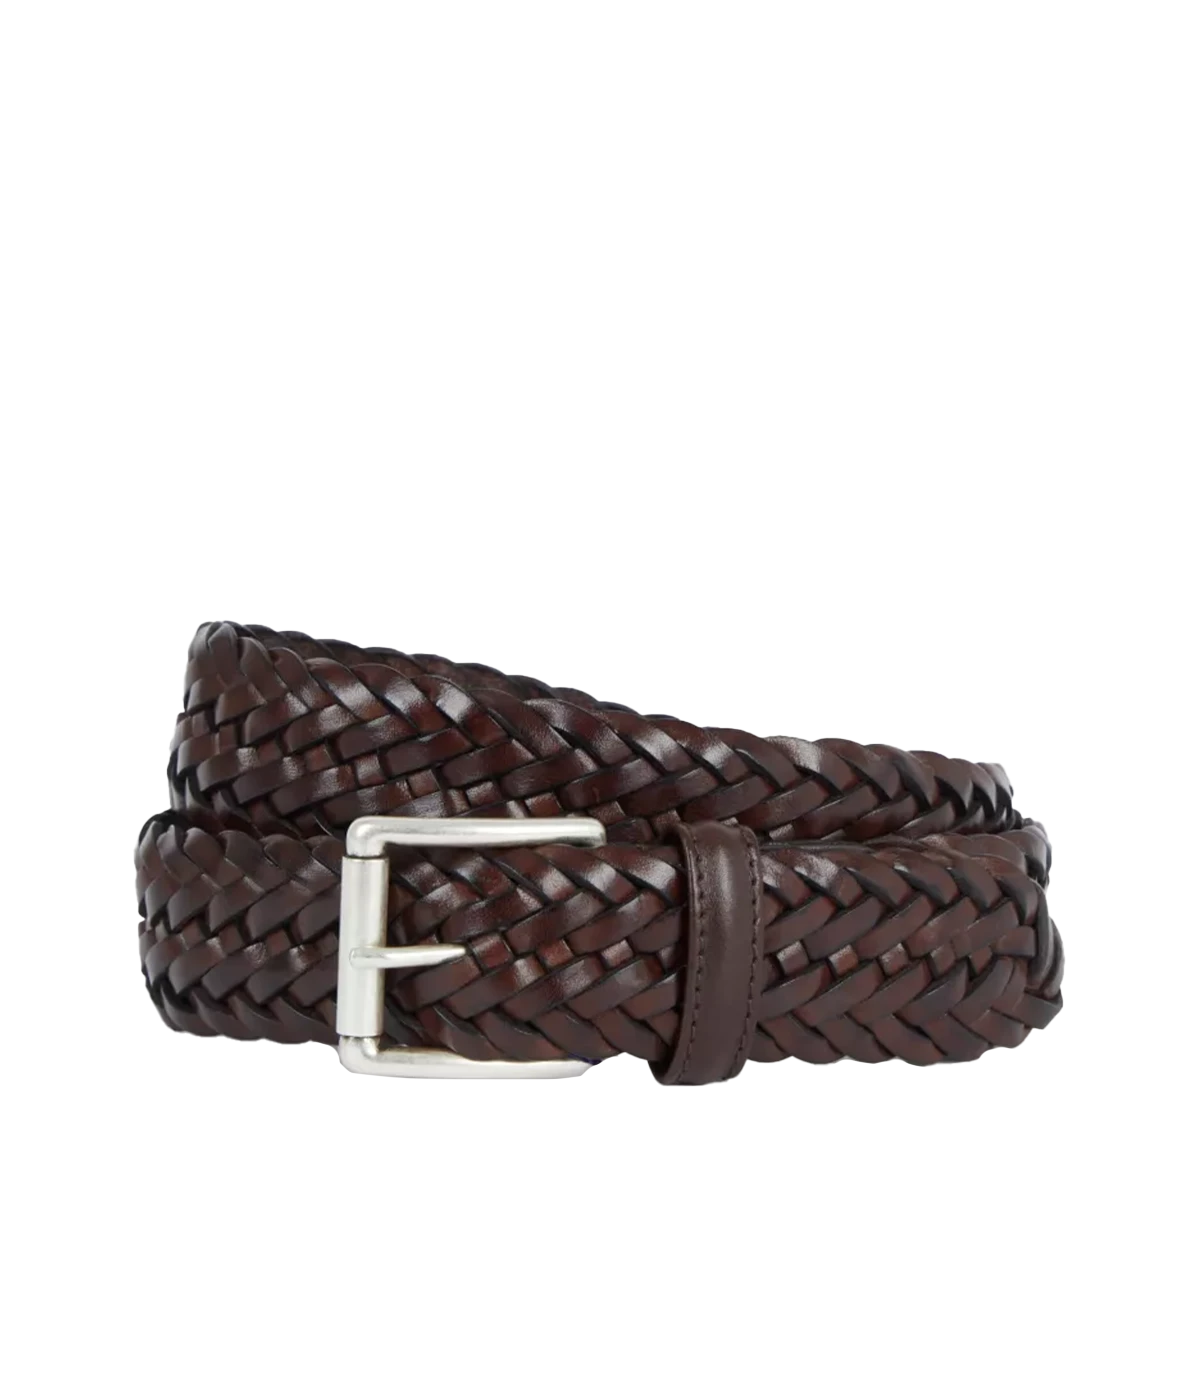 Woven Leather Belt in Dark Brown